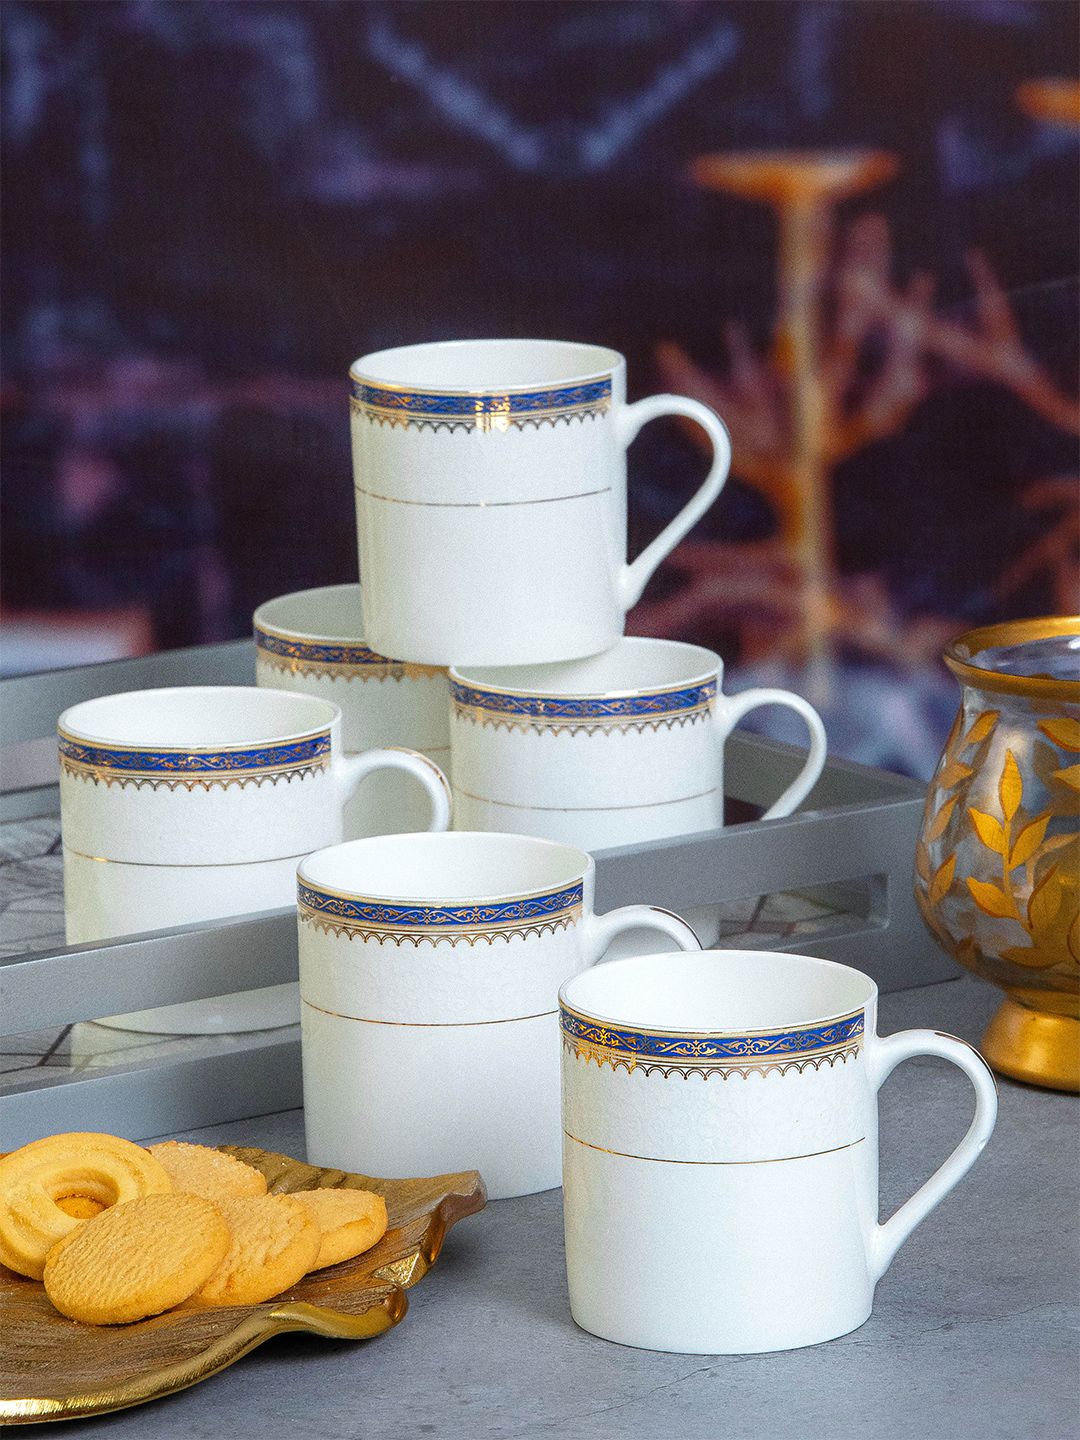 SONAKI White & Gold-Toned Gold-Toned Gold-Toned Ethnic Motifs Printed Bone China Glossy Mugs Set of Cups and Mugs Price in India